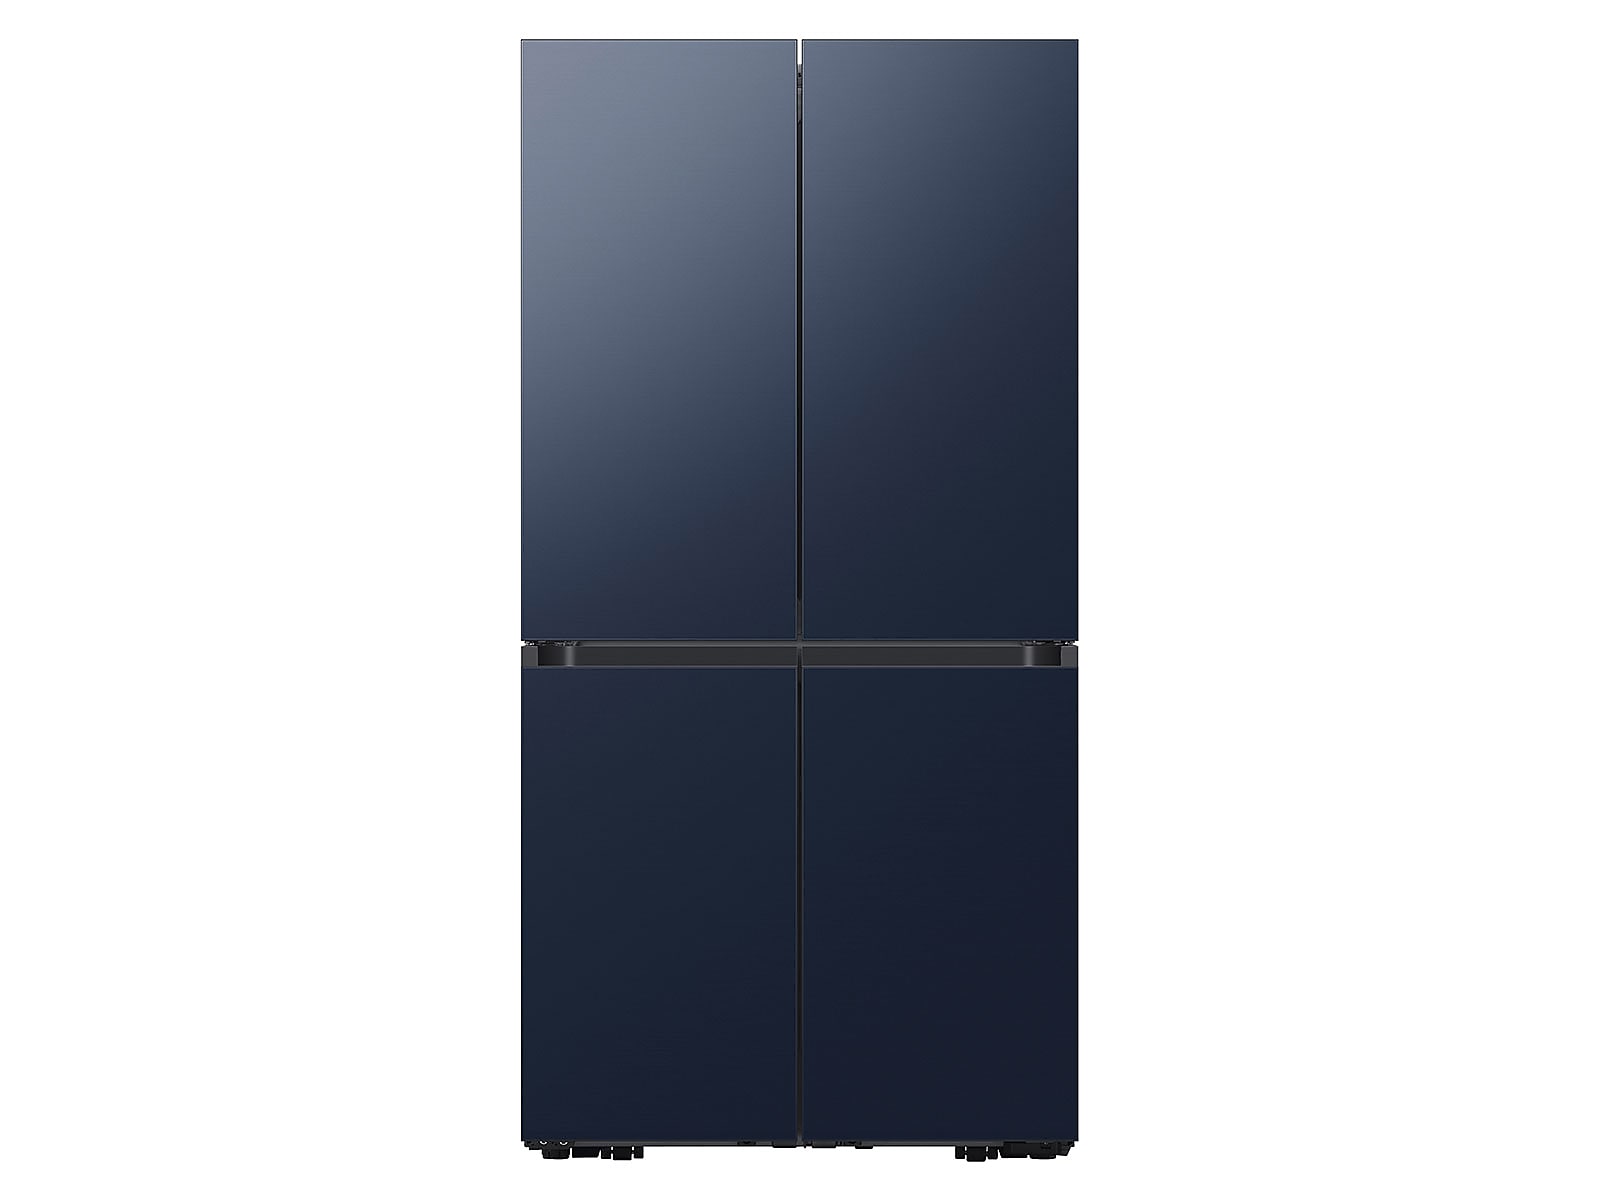 Samsung Bespoke 4-Door Flex™ Refrigerator in Navy Blue Steel (29 cu. ft.) in Navy Steel(BNDL-1616691299122)